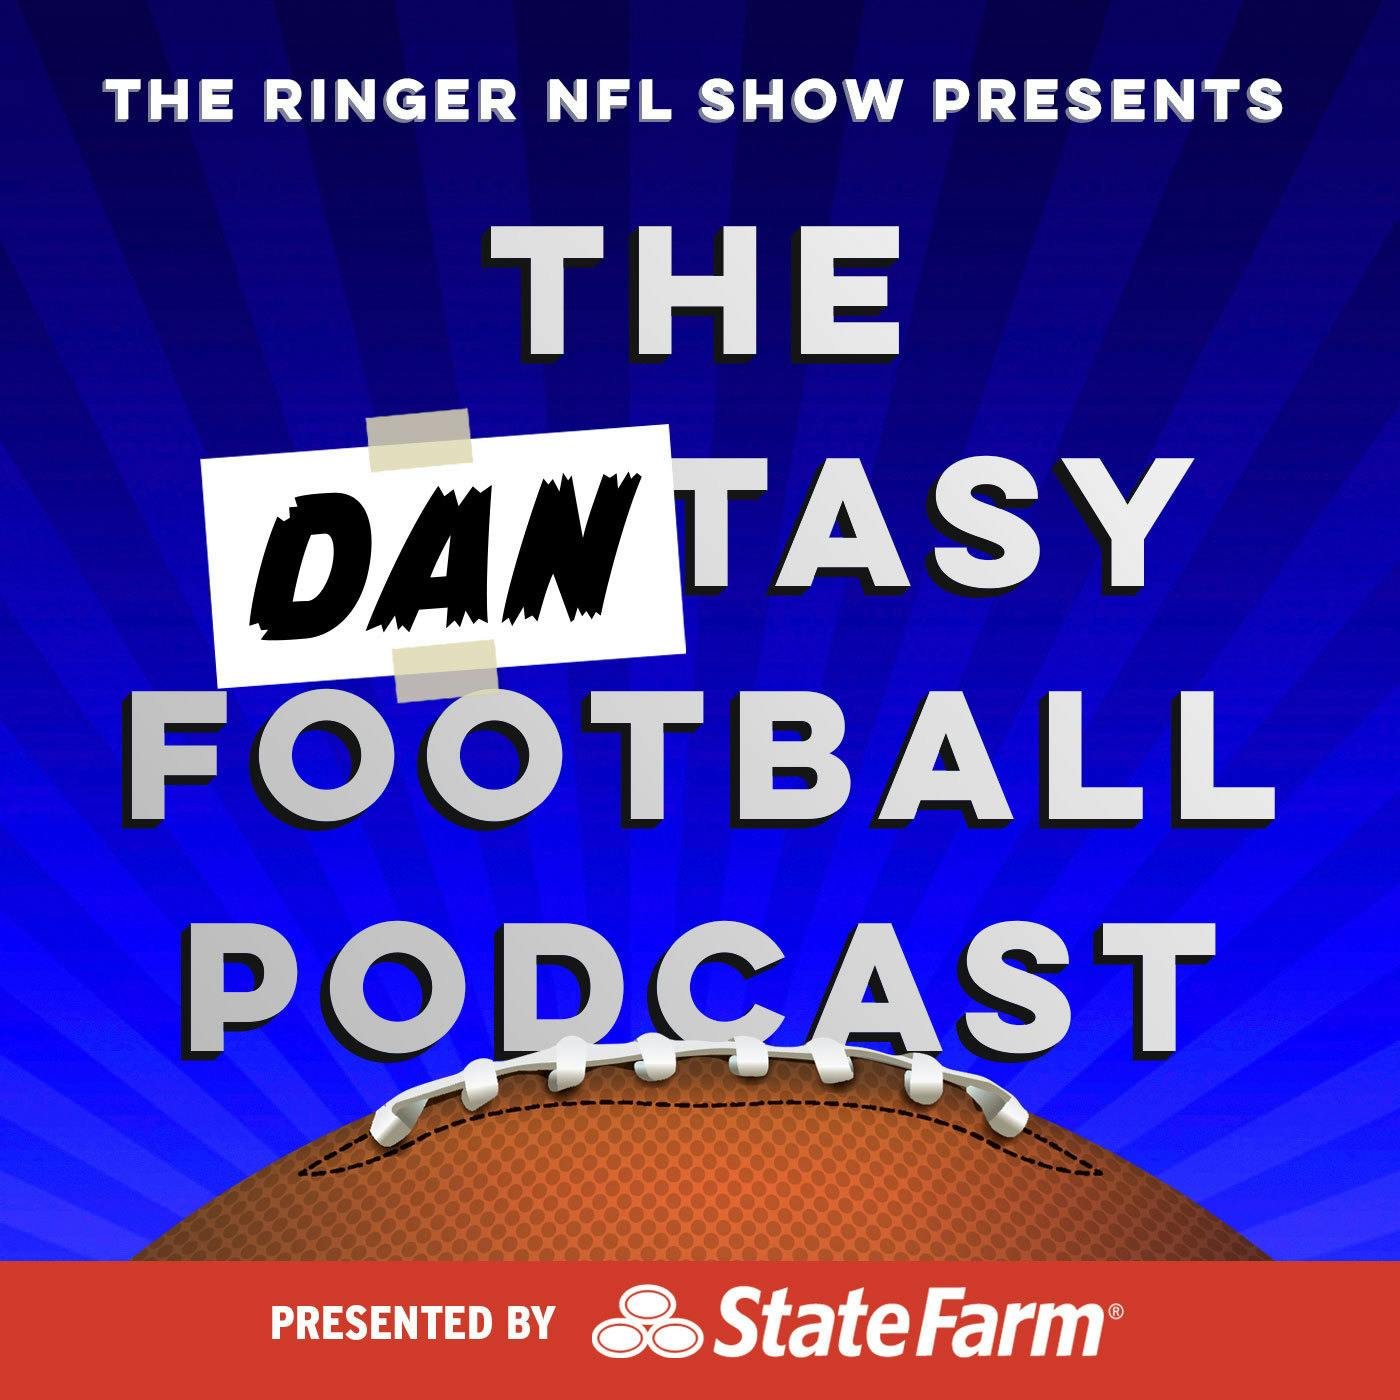 Saquon vs. McCaffrey, Lamar vs. Everyone, and More Week 16 Daily Decisions | The Dantasy Football Podcast